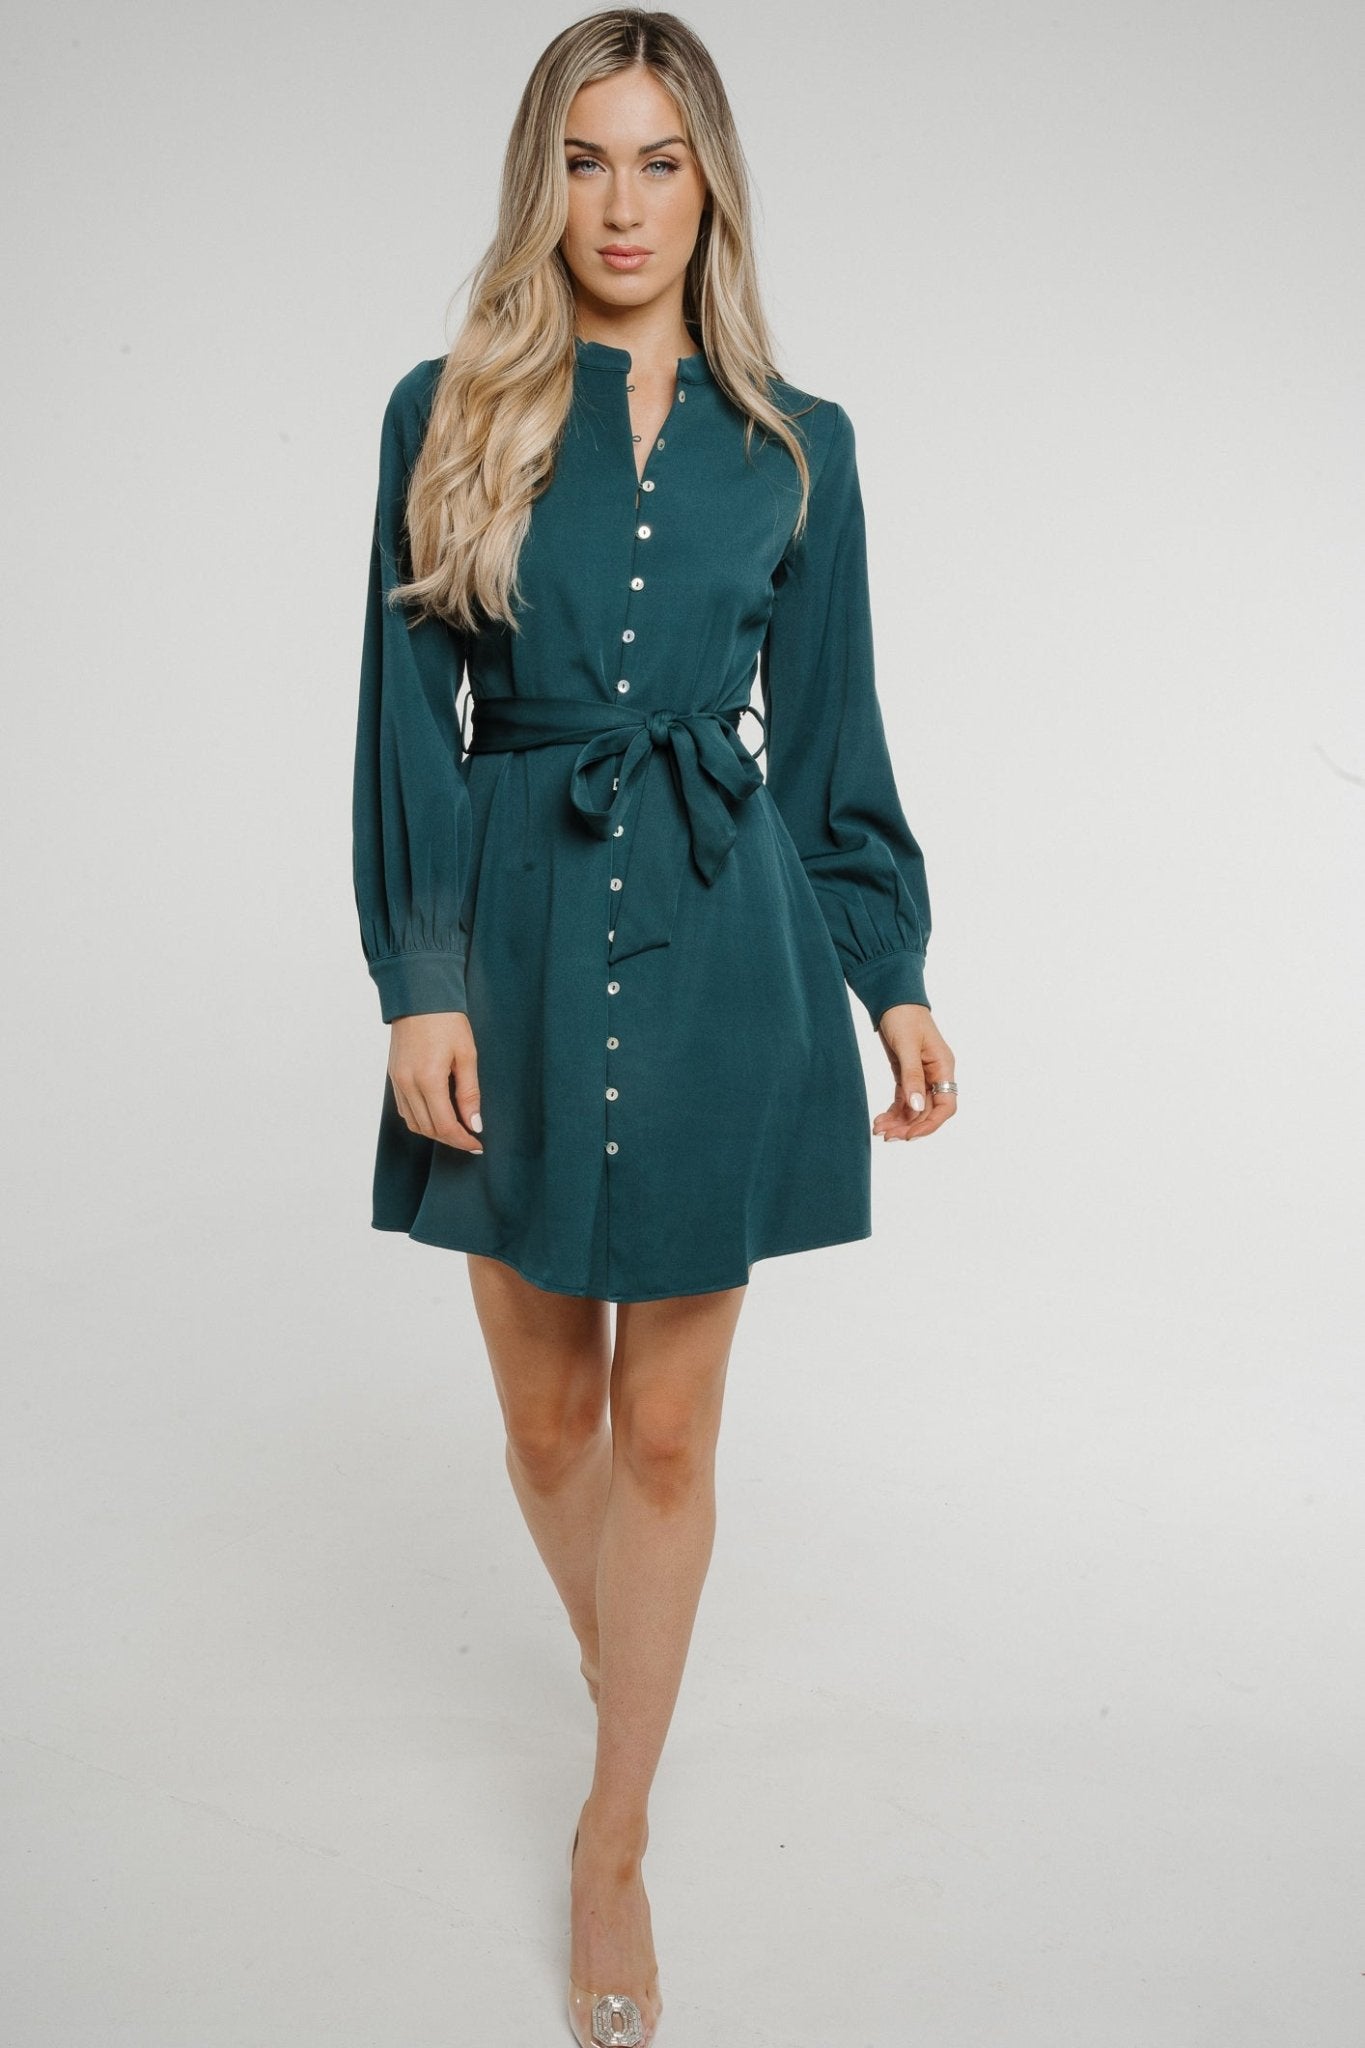 Becca Button Front Dress In Jade Green - The Walk in Wardrobe